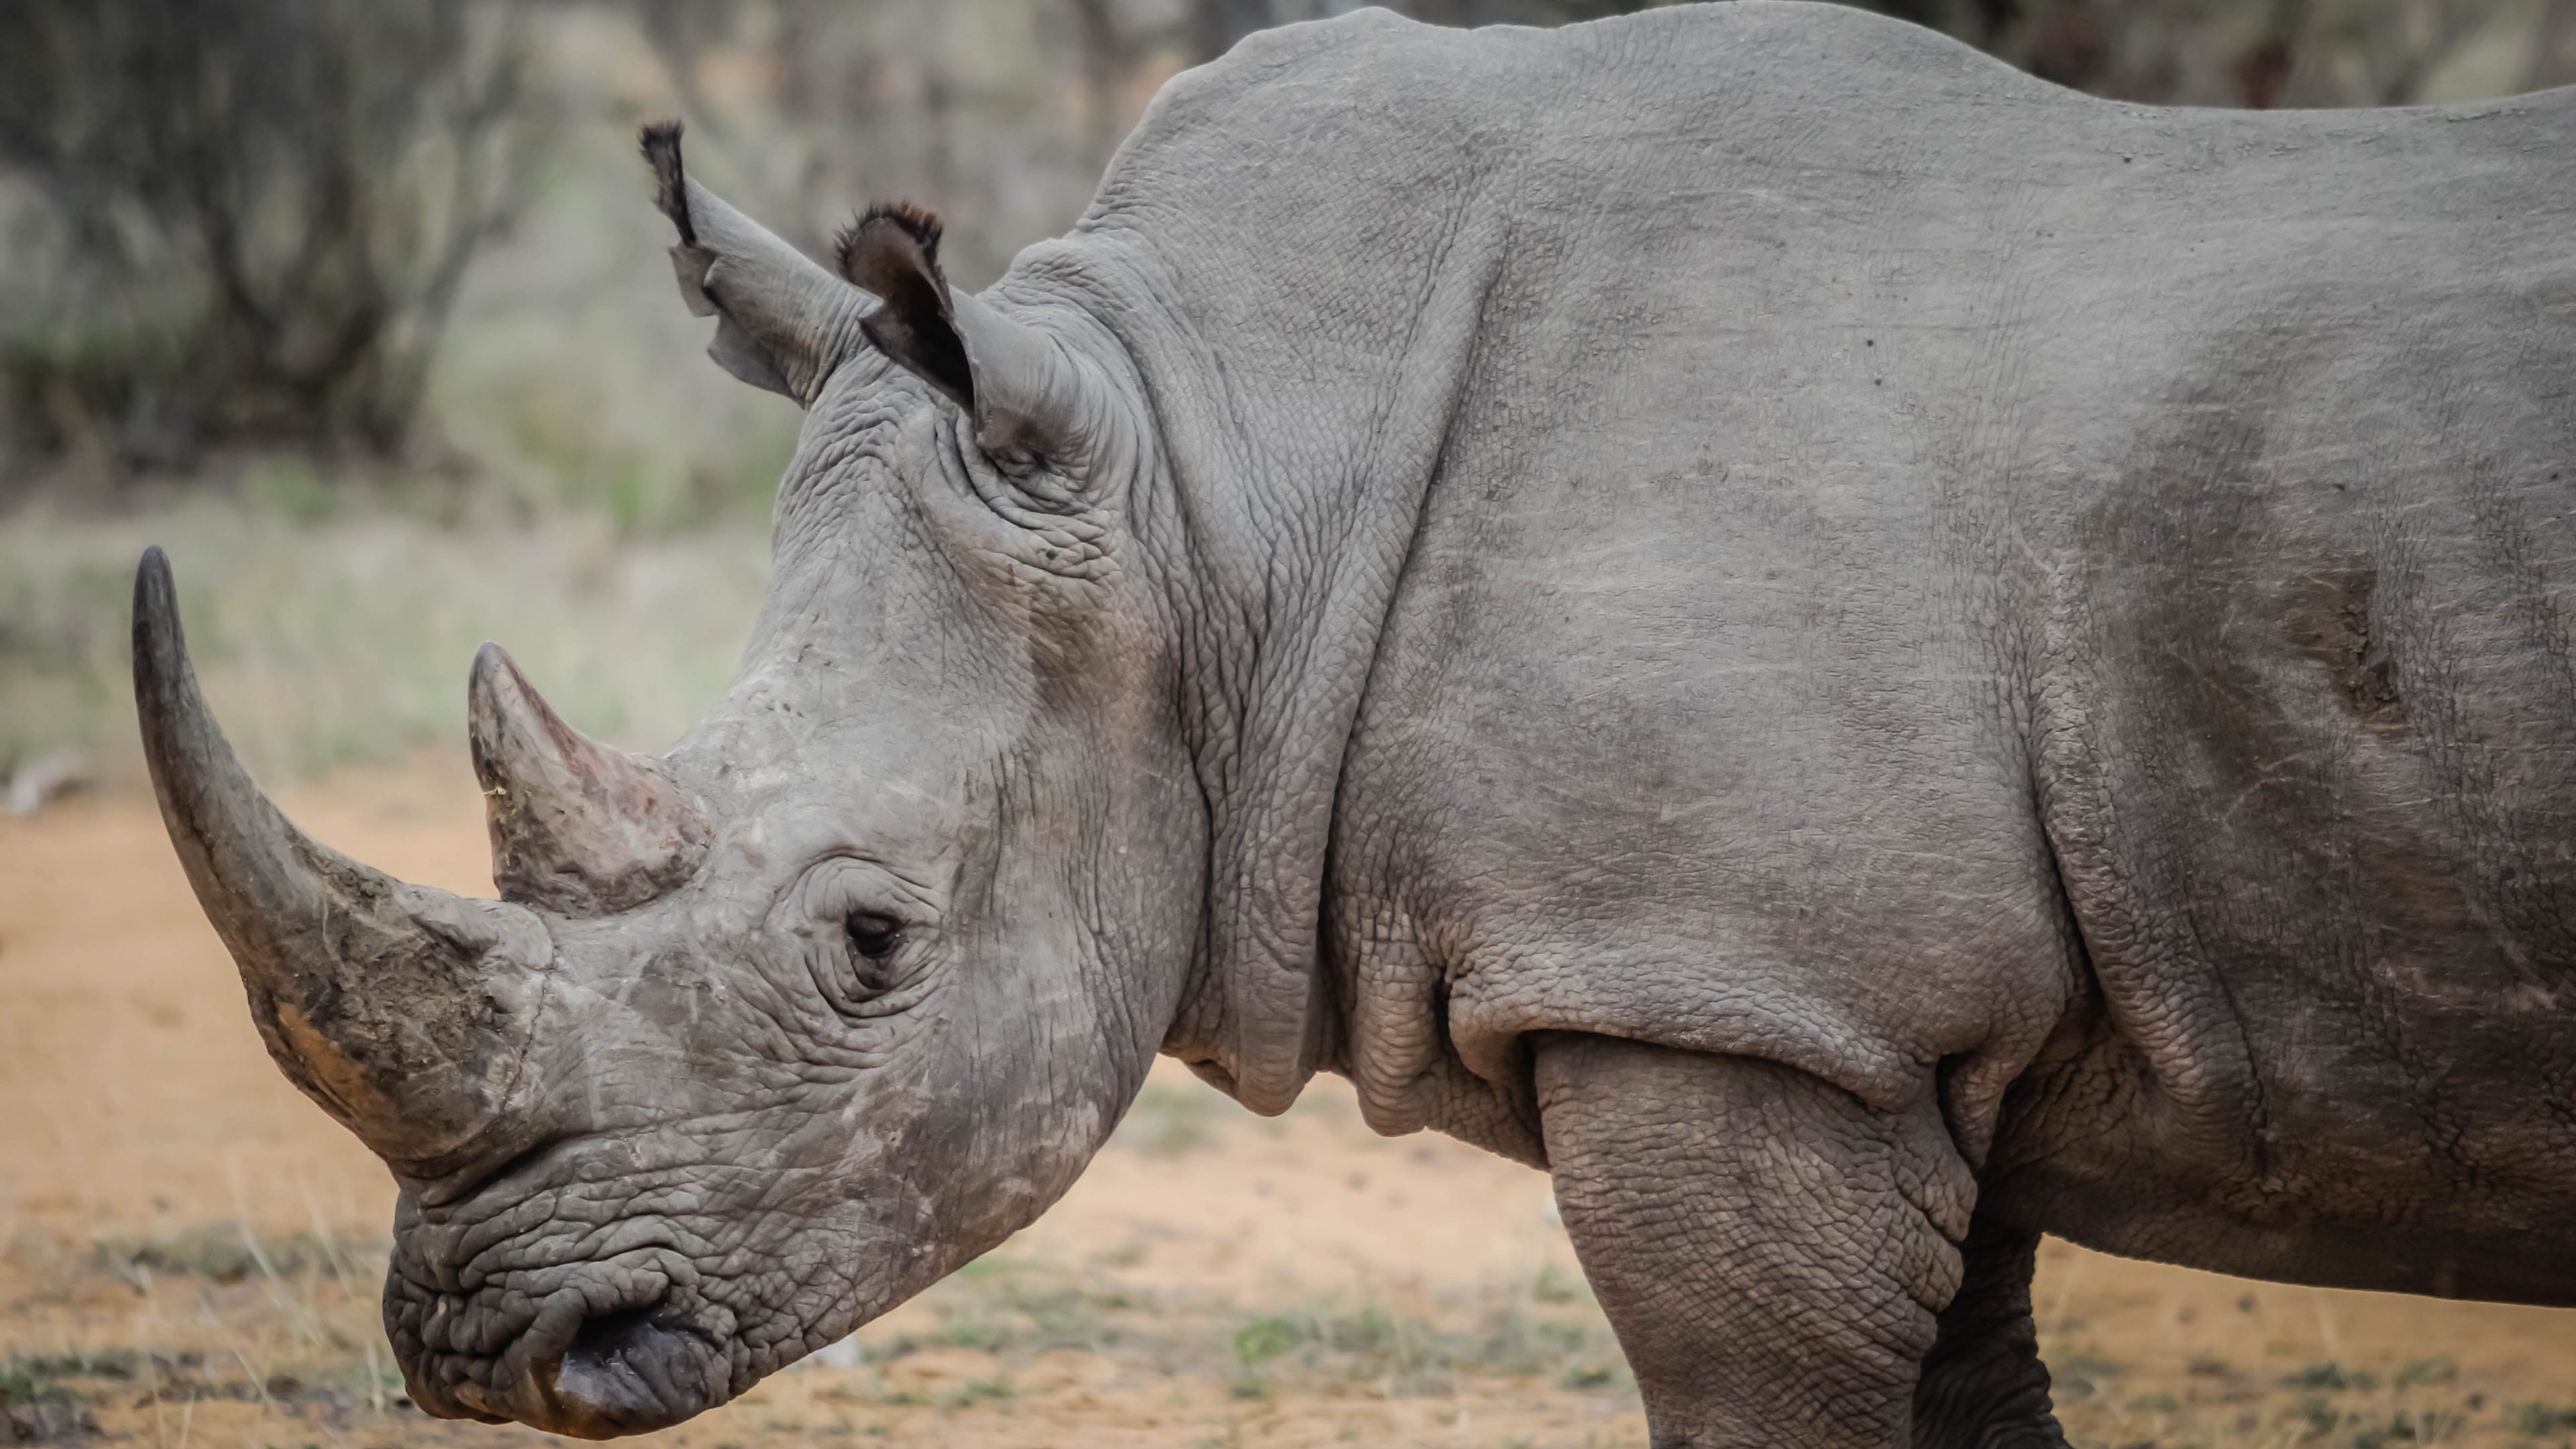 Grey Rhinoceros on Brown Ground During Daytime. Wallpaper in 3840x2160 Resolution